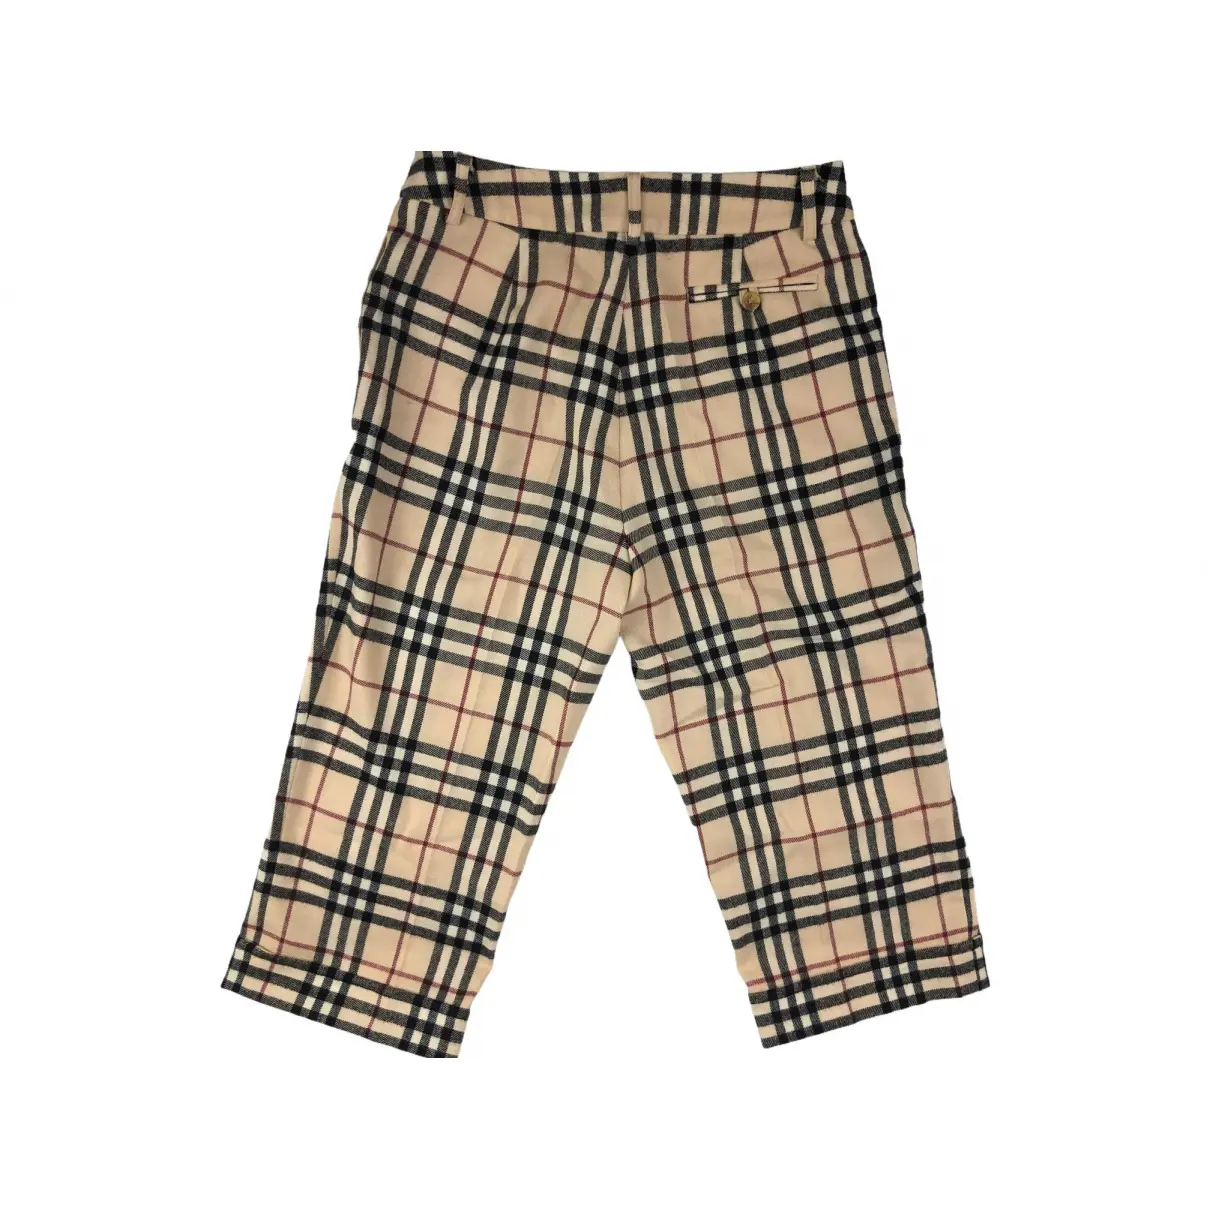 Buy Burberry Beige Cotton Shorts online - Vintage